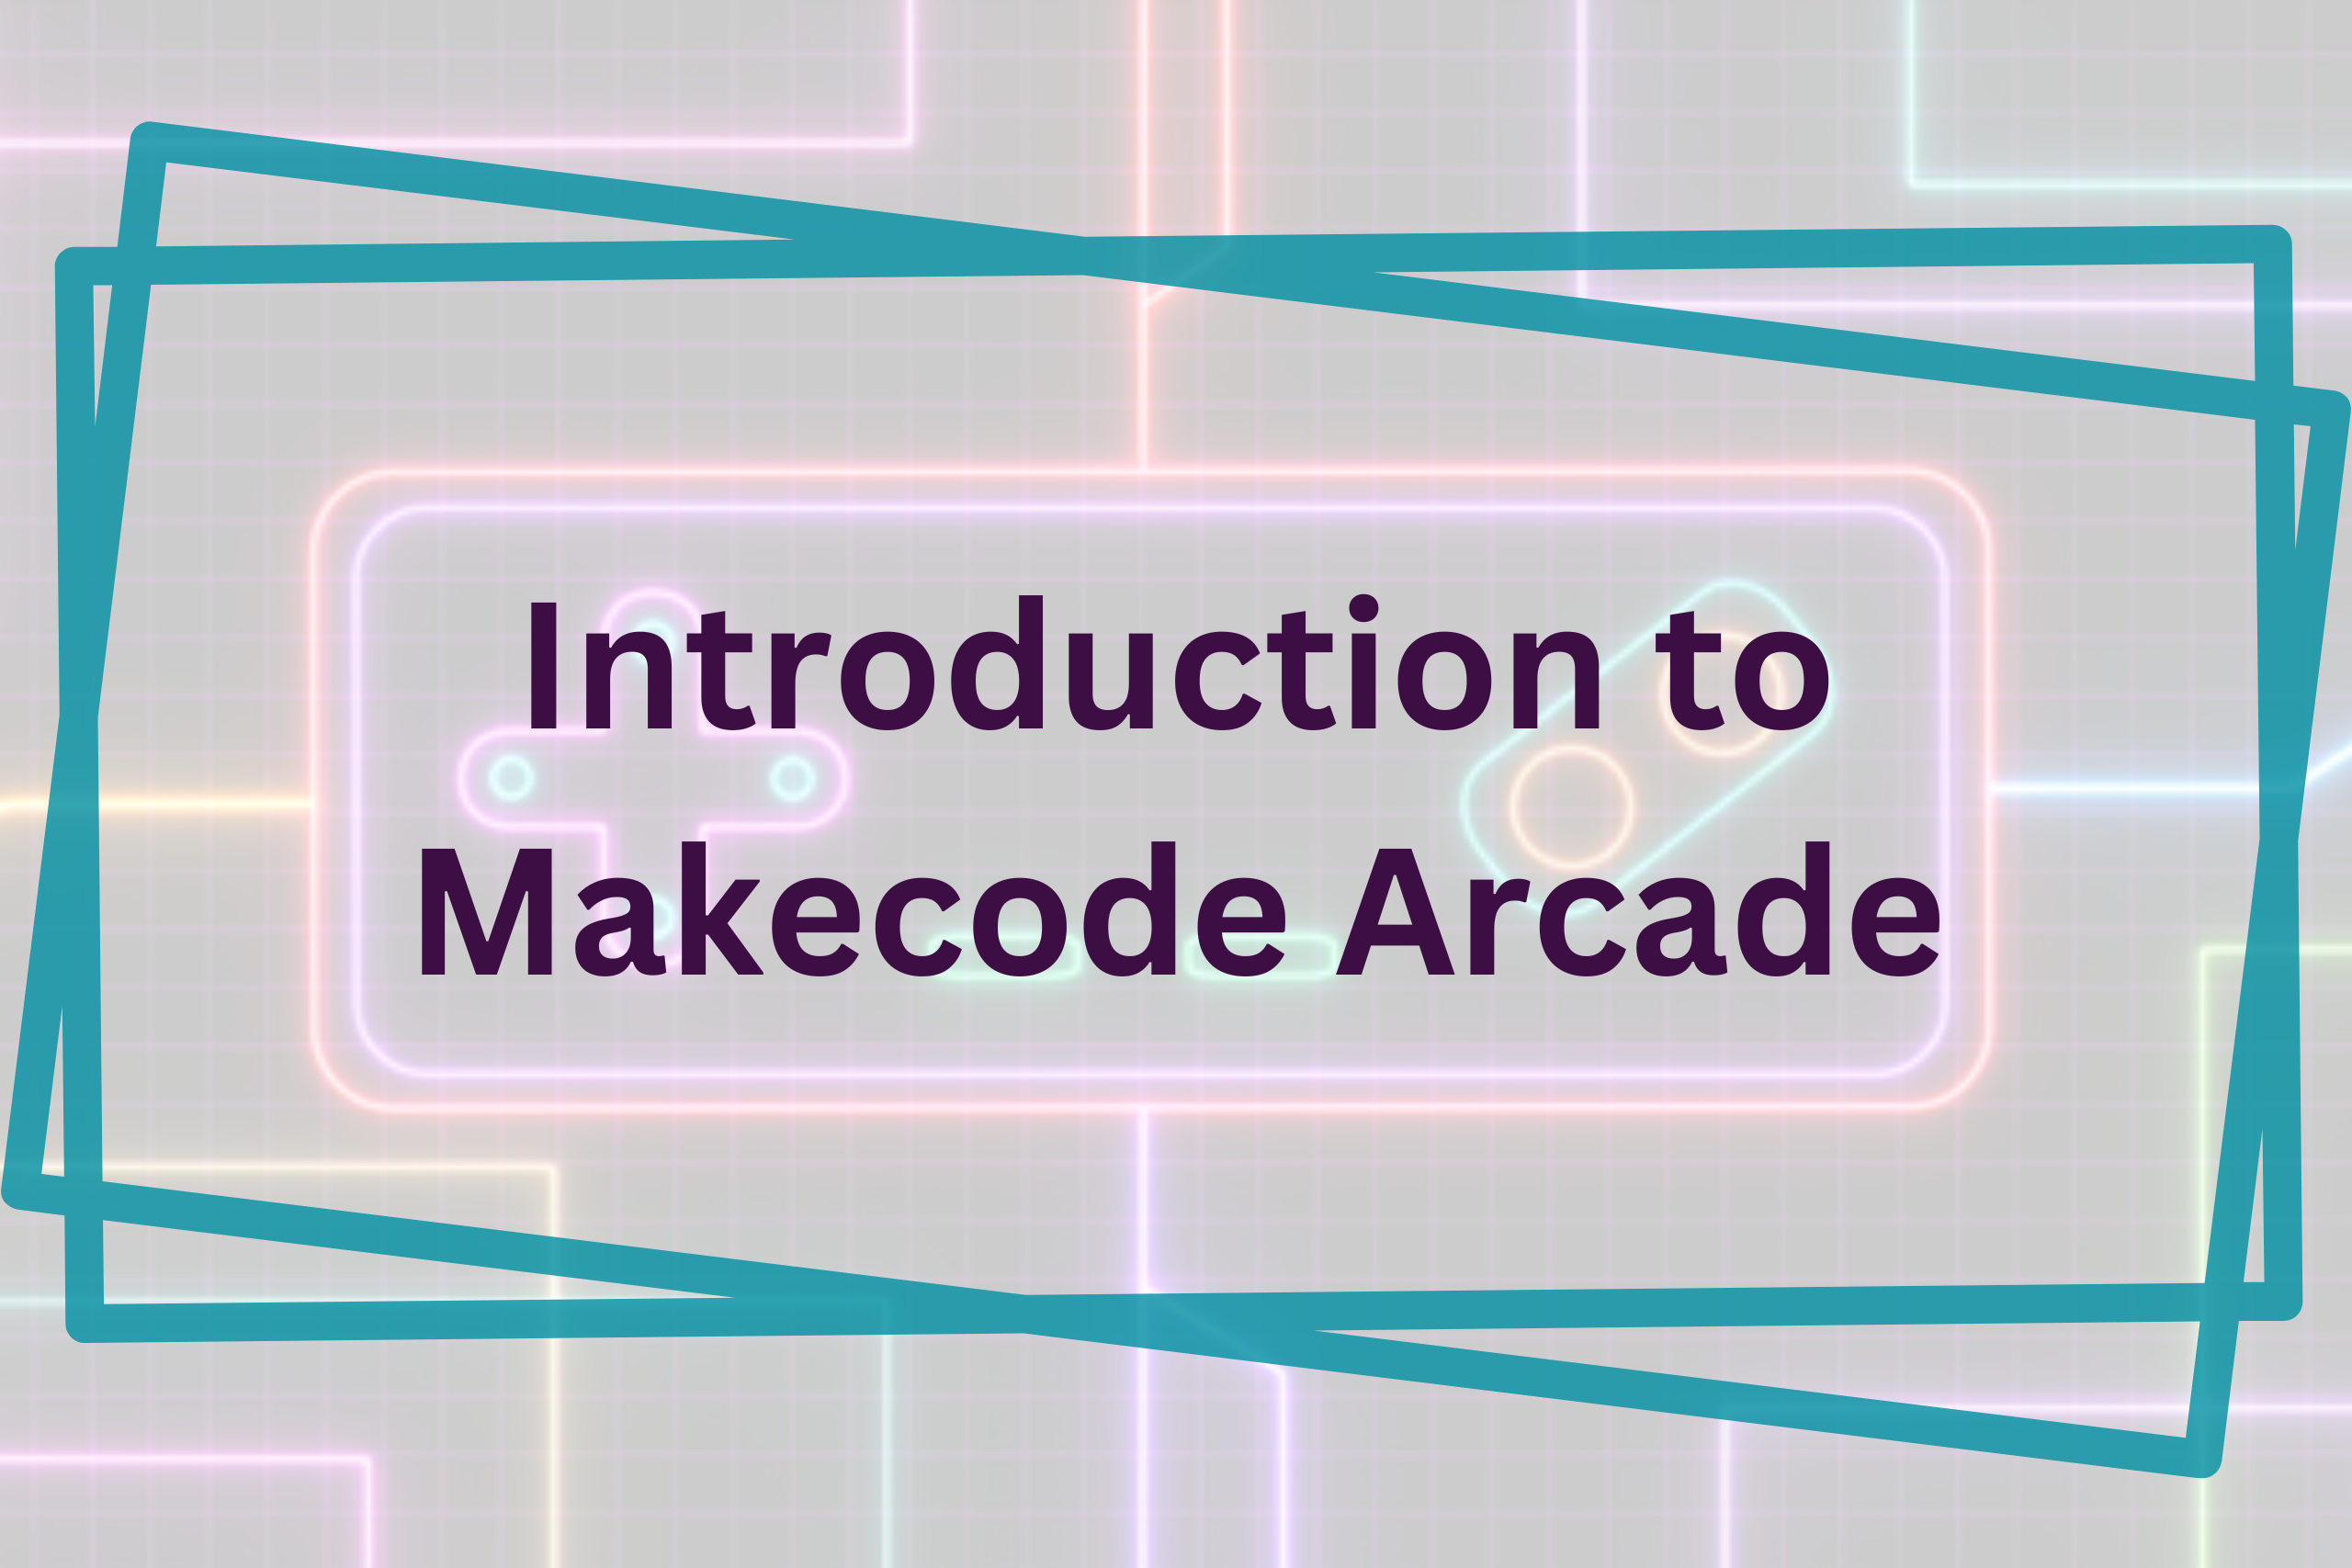 MakeCode Arcade